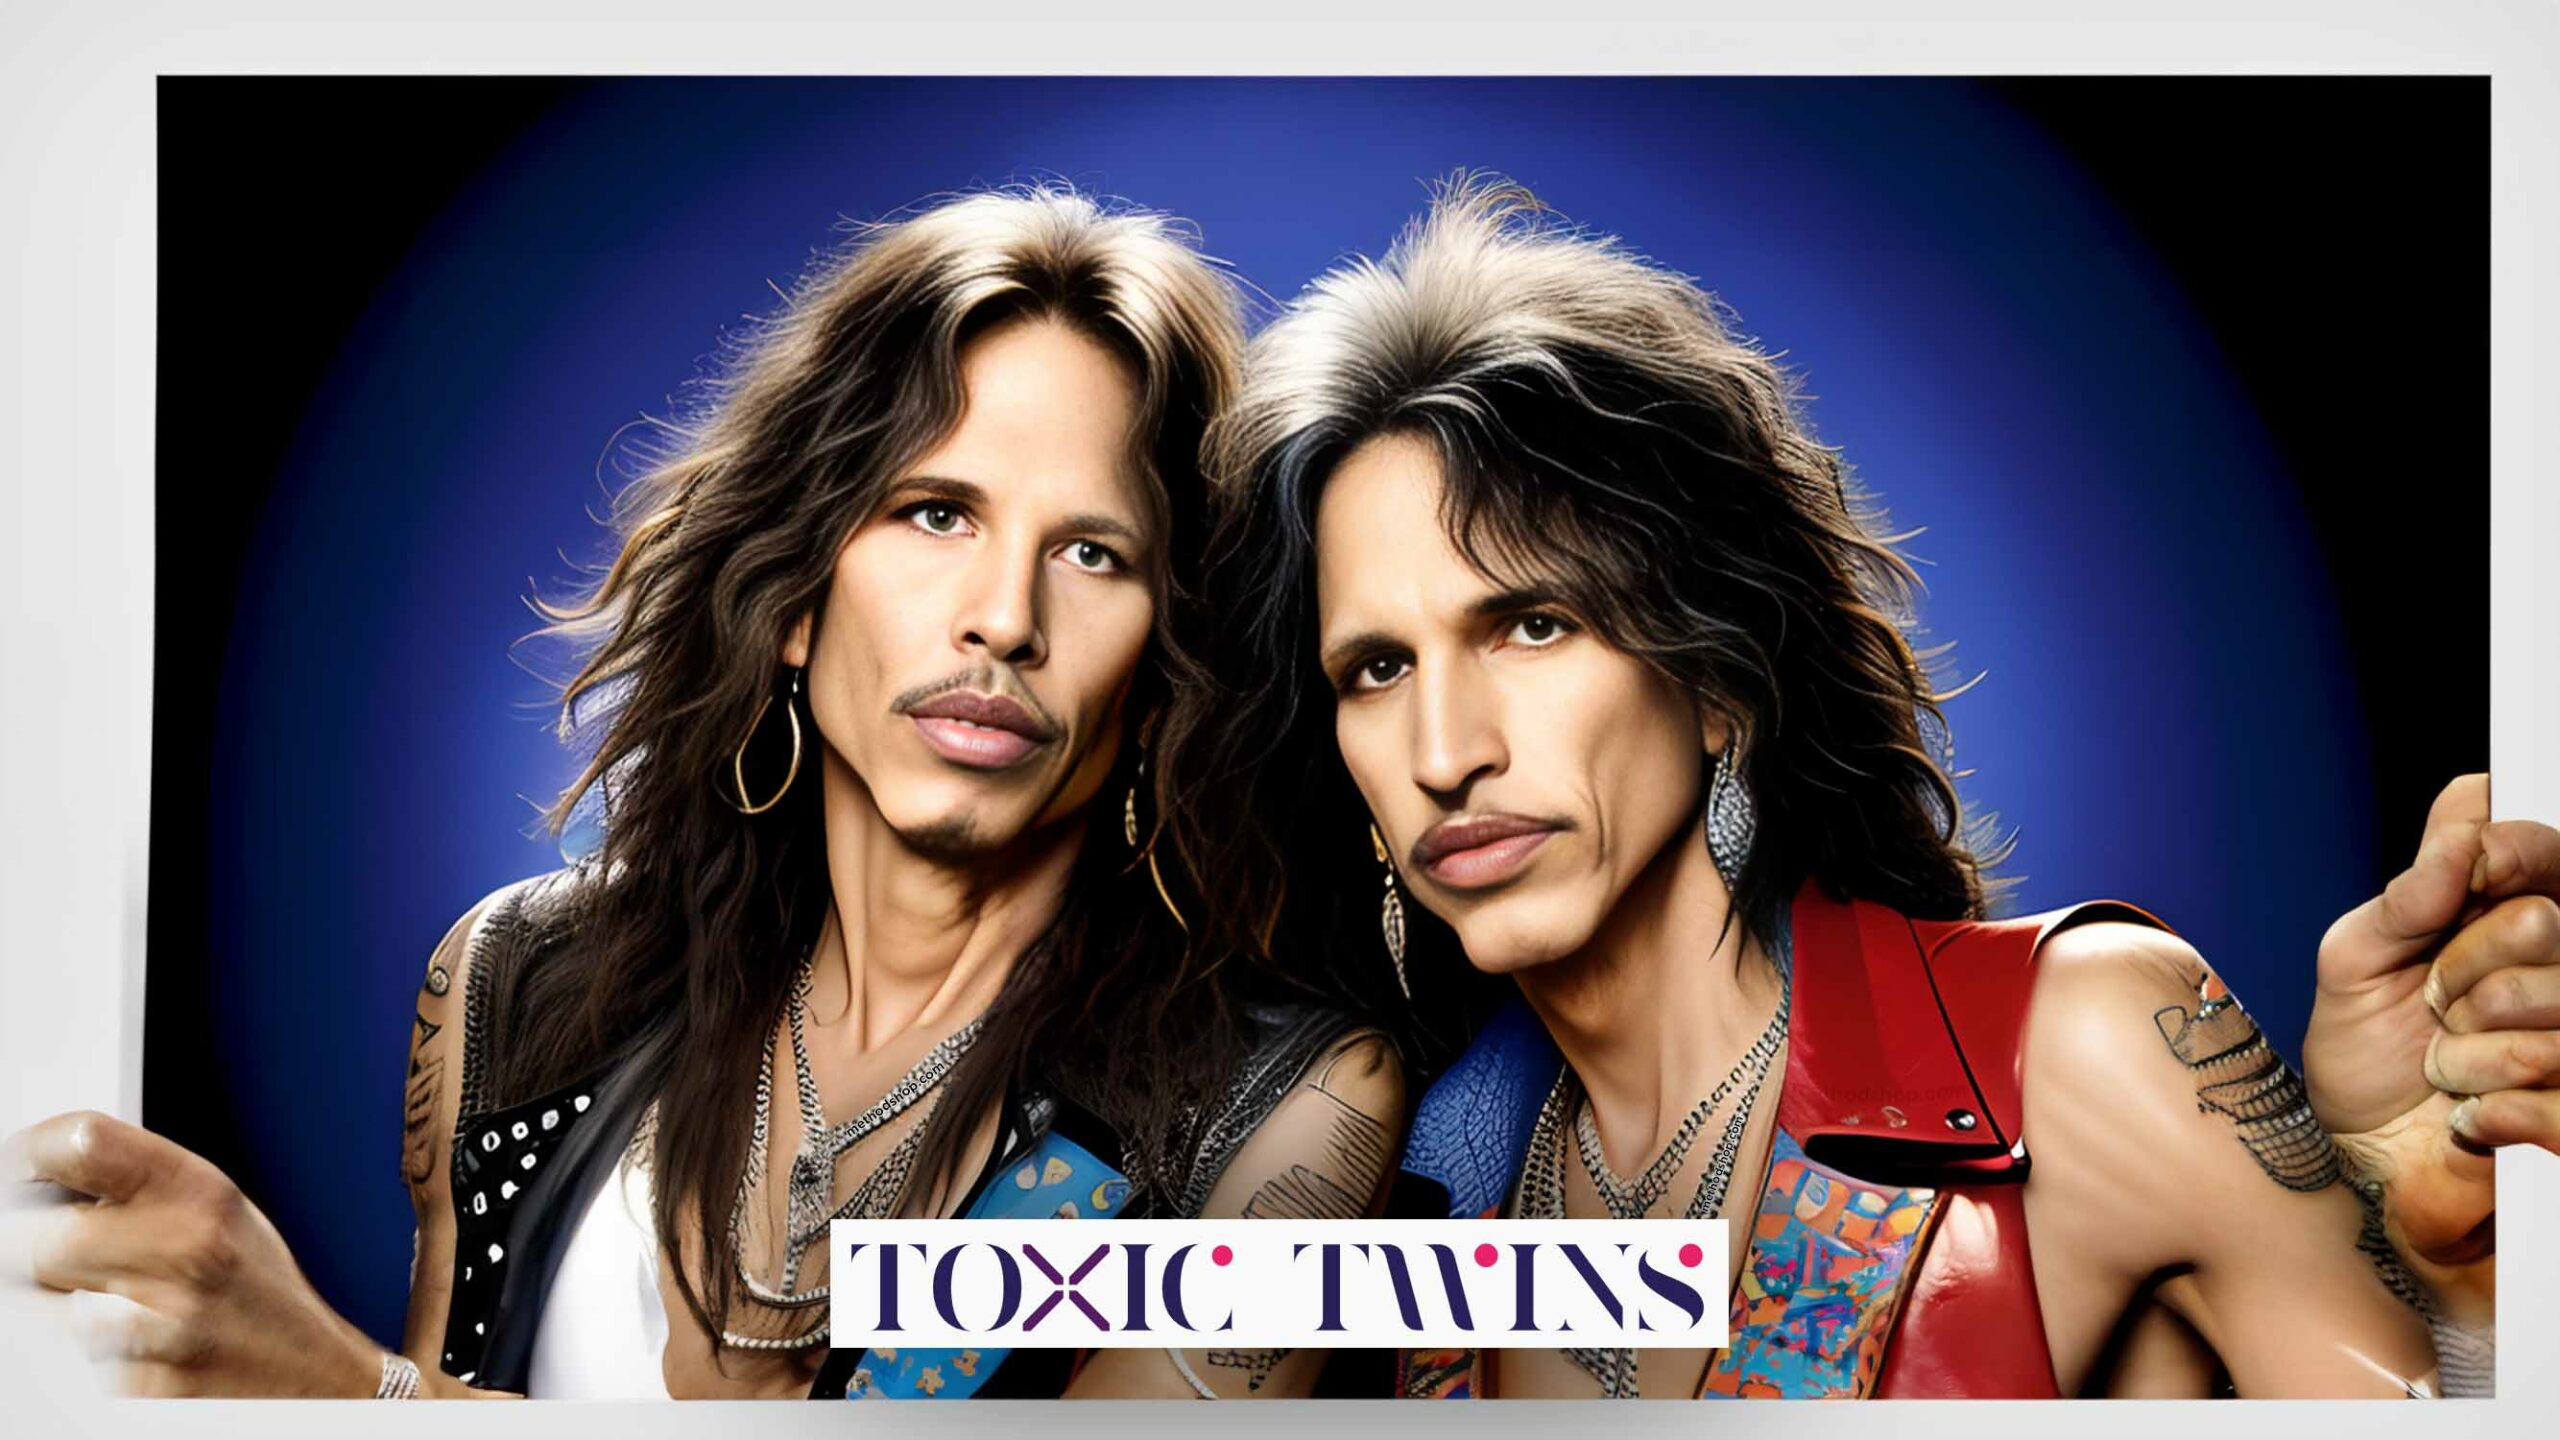 Digital Artwork Of The Aerosmith Toxic Twins, Steven Tyler And Joe Perry.